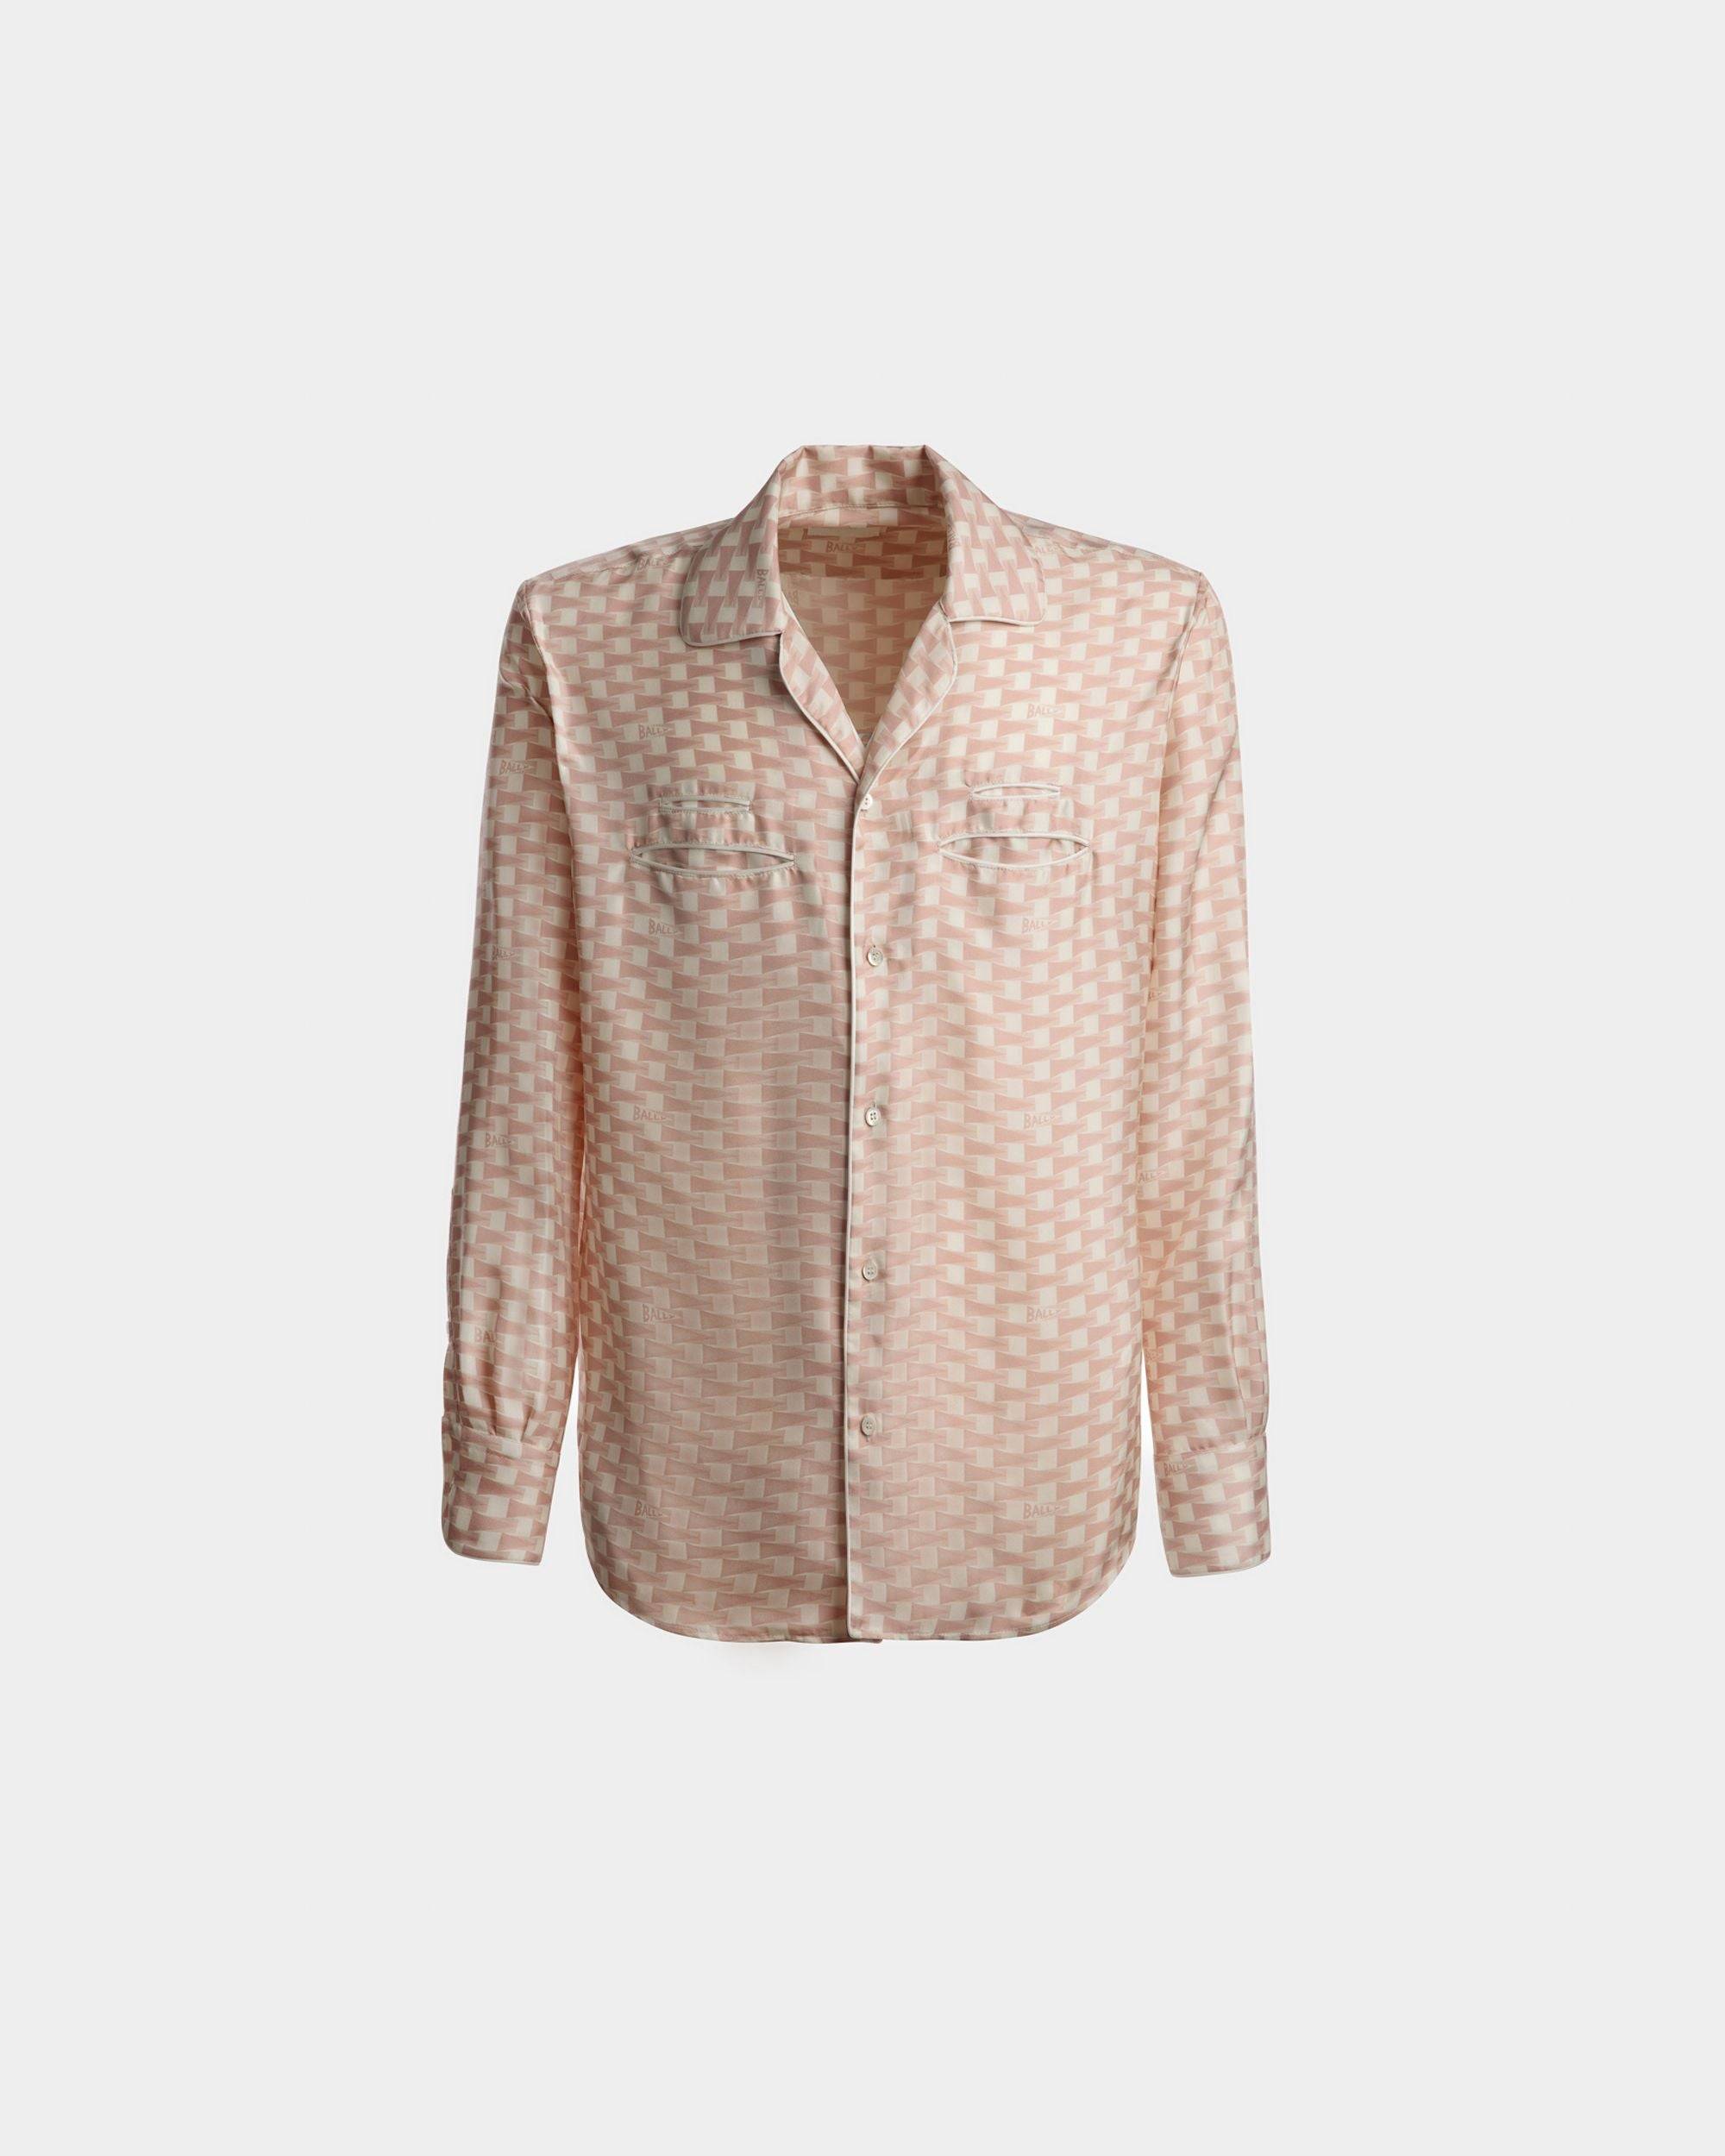 Pennant Print Shirt | Men's Shirt | Dusty Petal Silk | Bally | Still Life Front